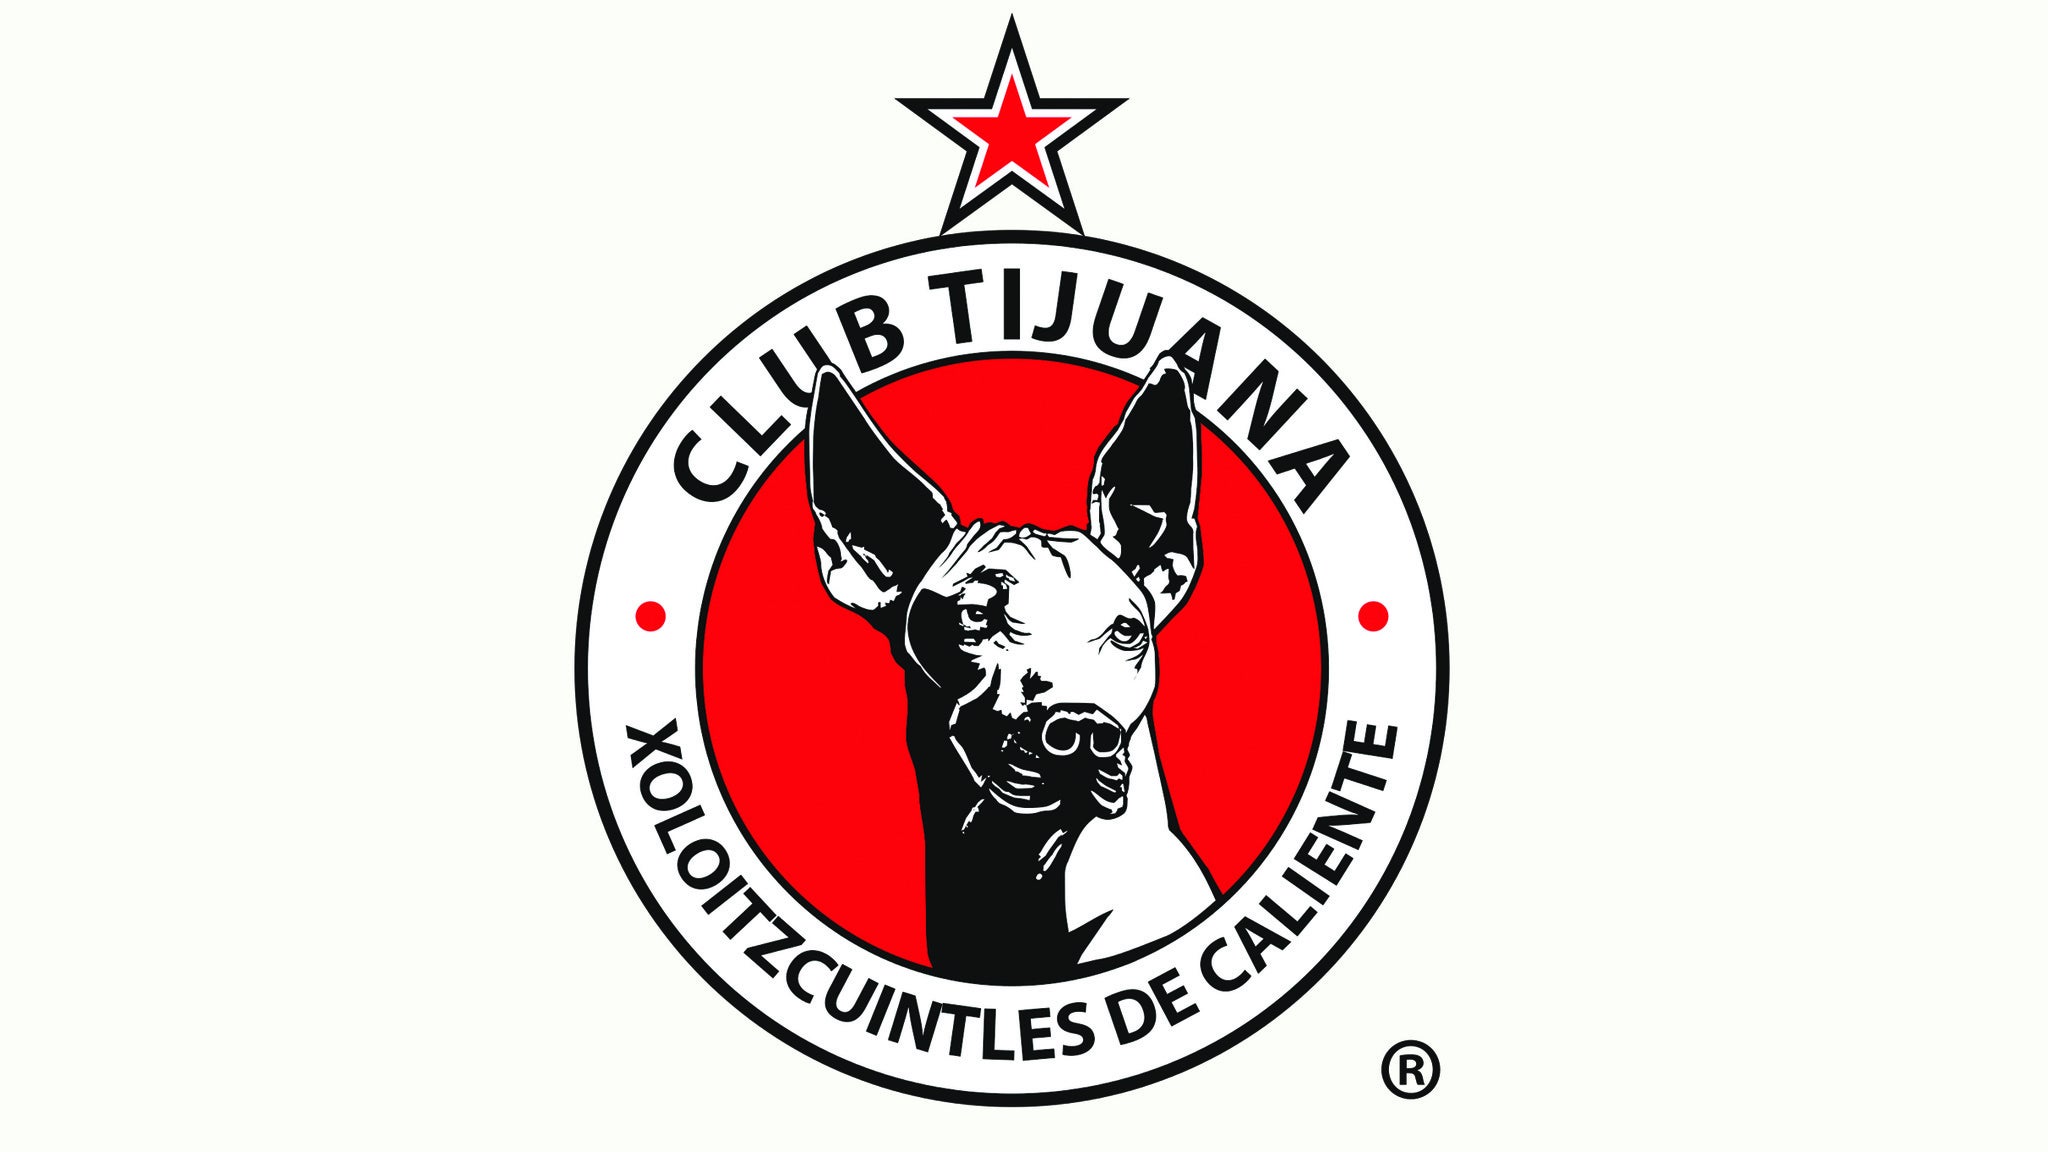 Club Tijuana presale information on freepresalepasswords.com